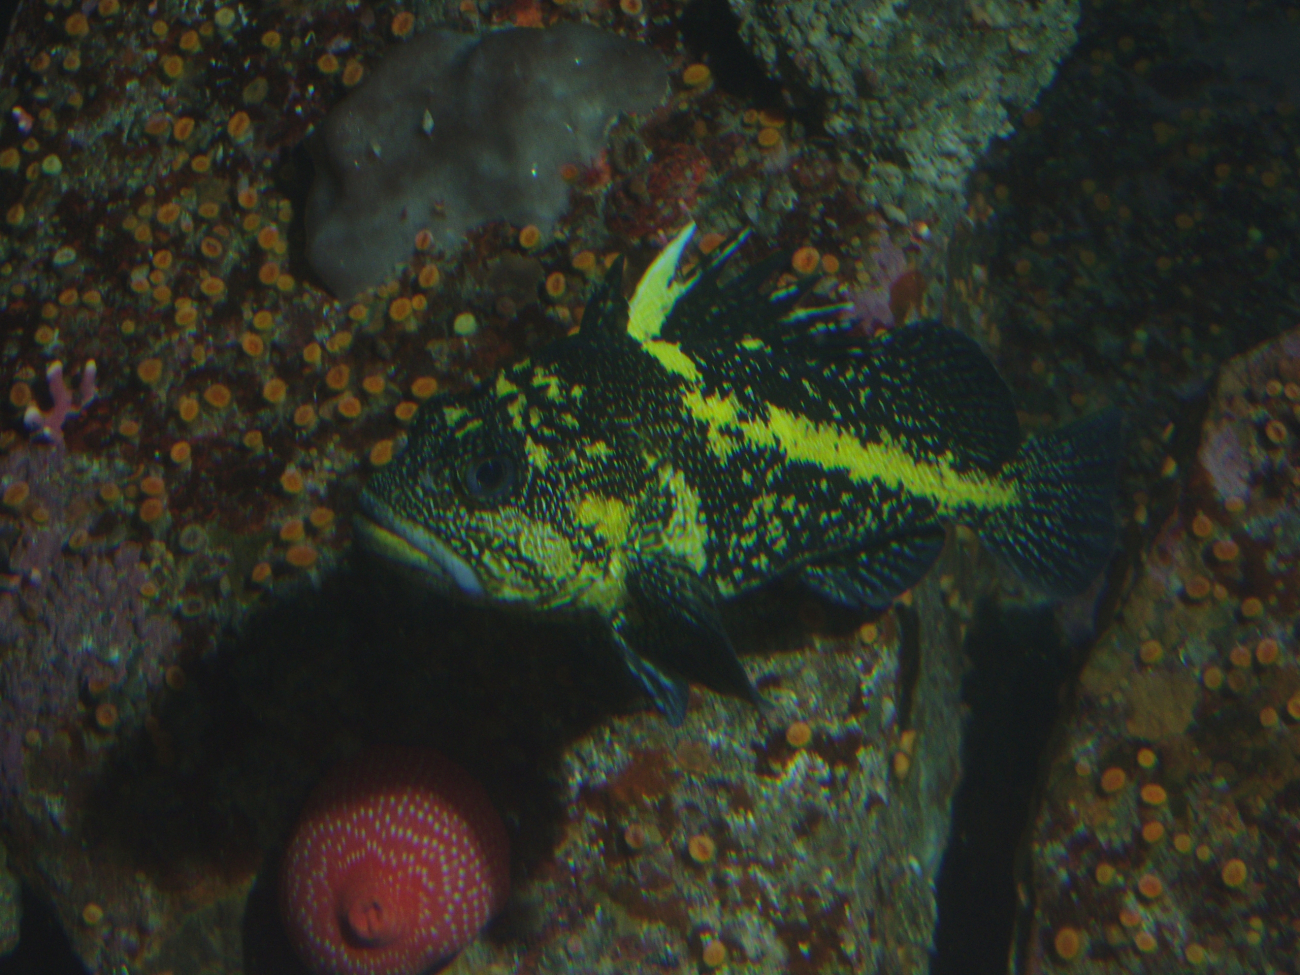 China rockfish (Sebastes nebulosus) in rocky reef habitat at 30 meters depth